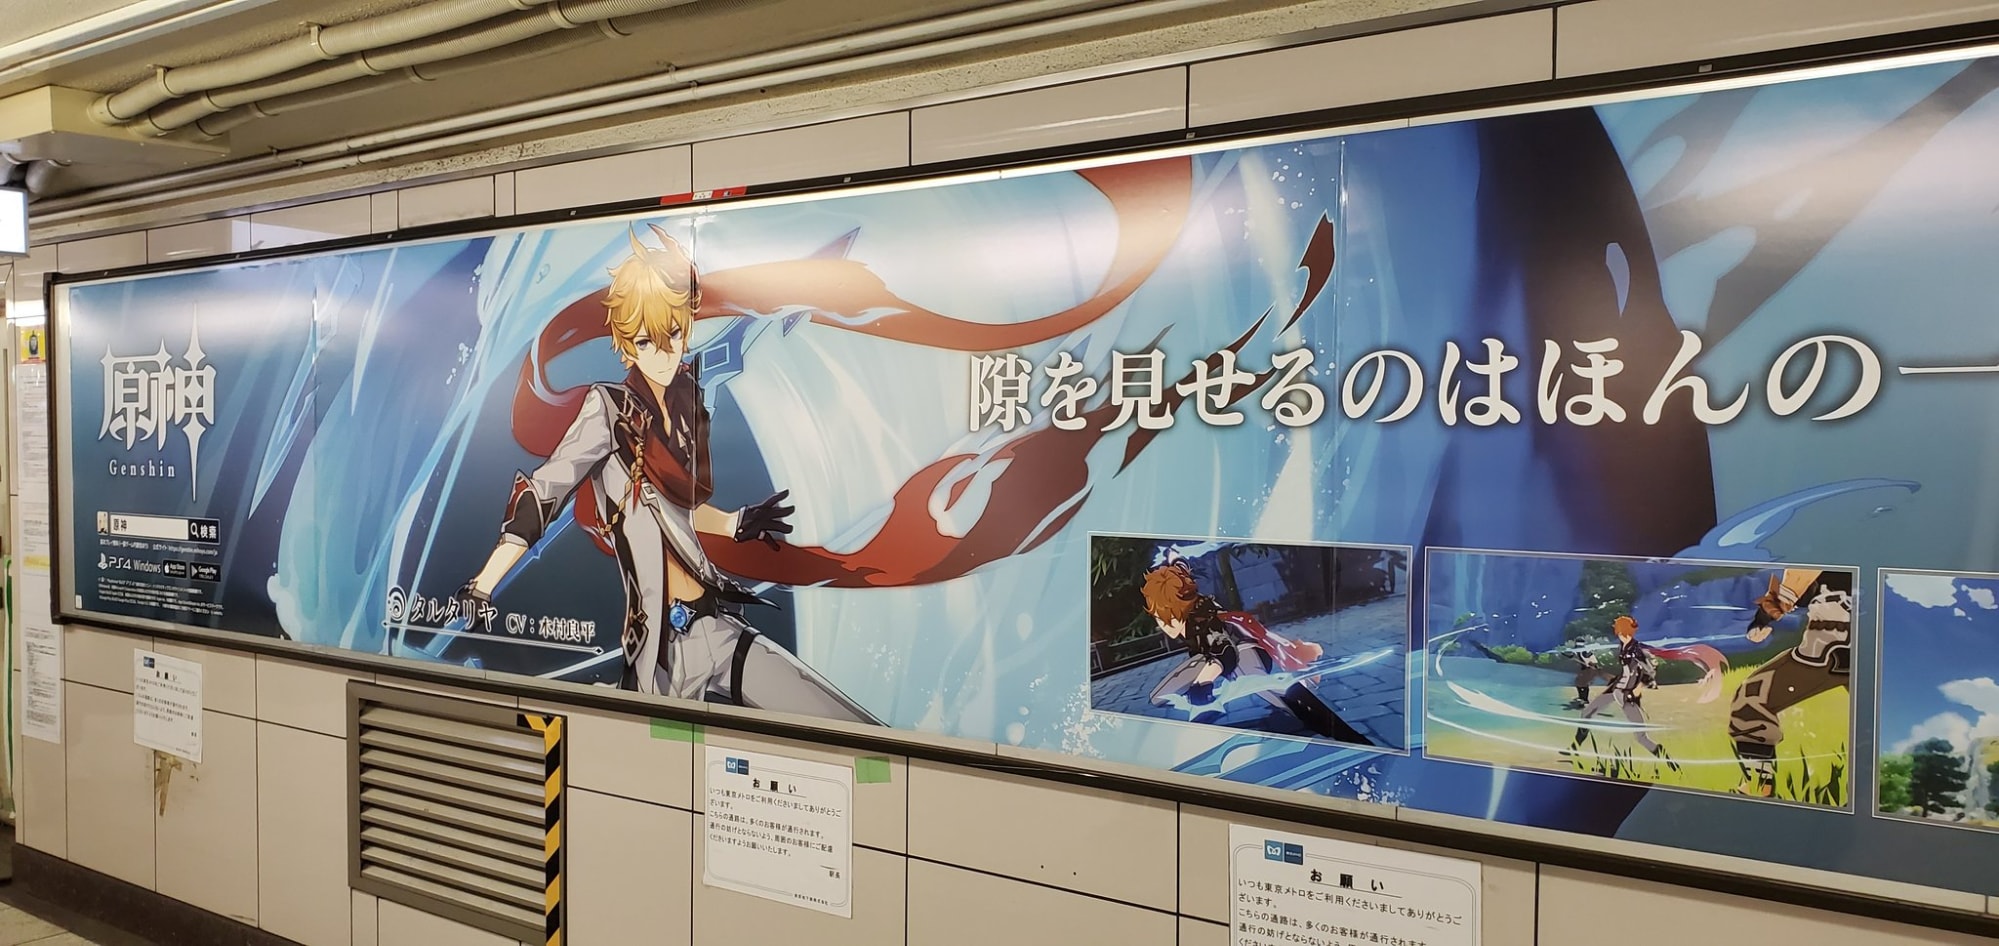 Genshin Impact Ikebukuro Station - Childe banner